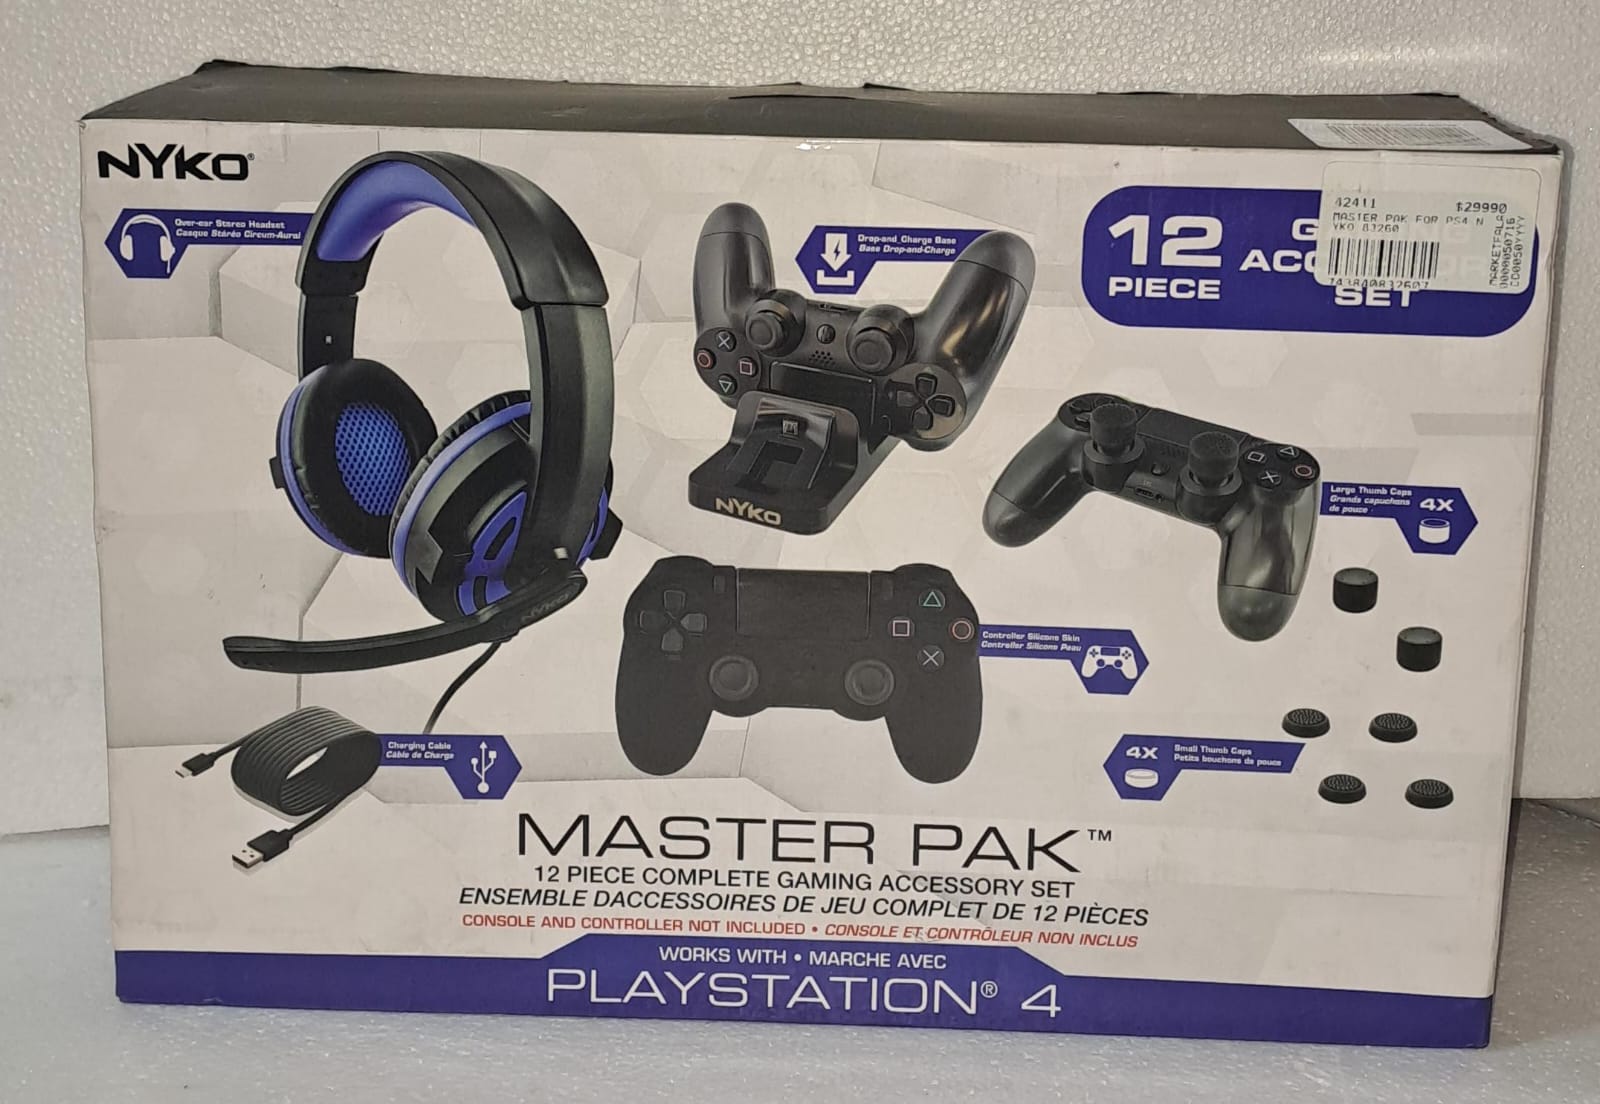 Master Pack Nyco Playstation 4 [Openbox]